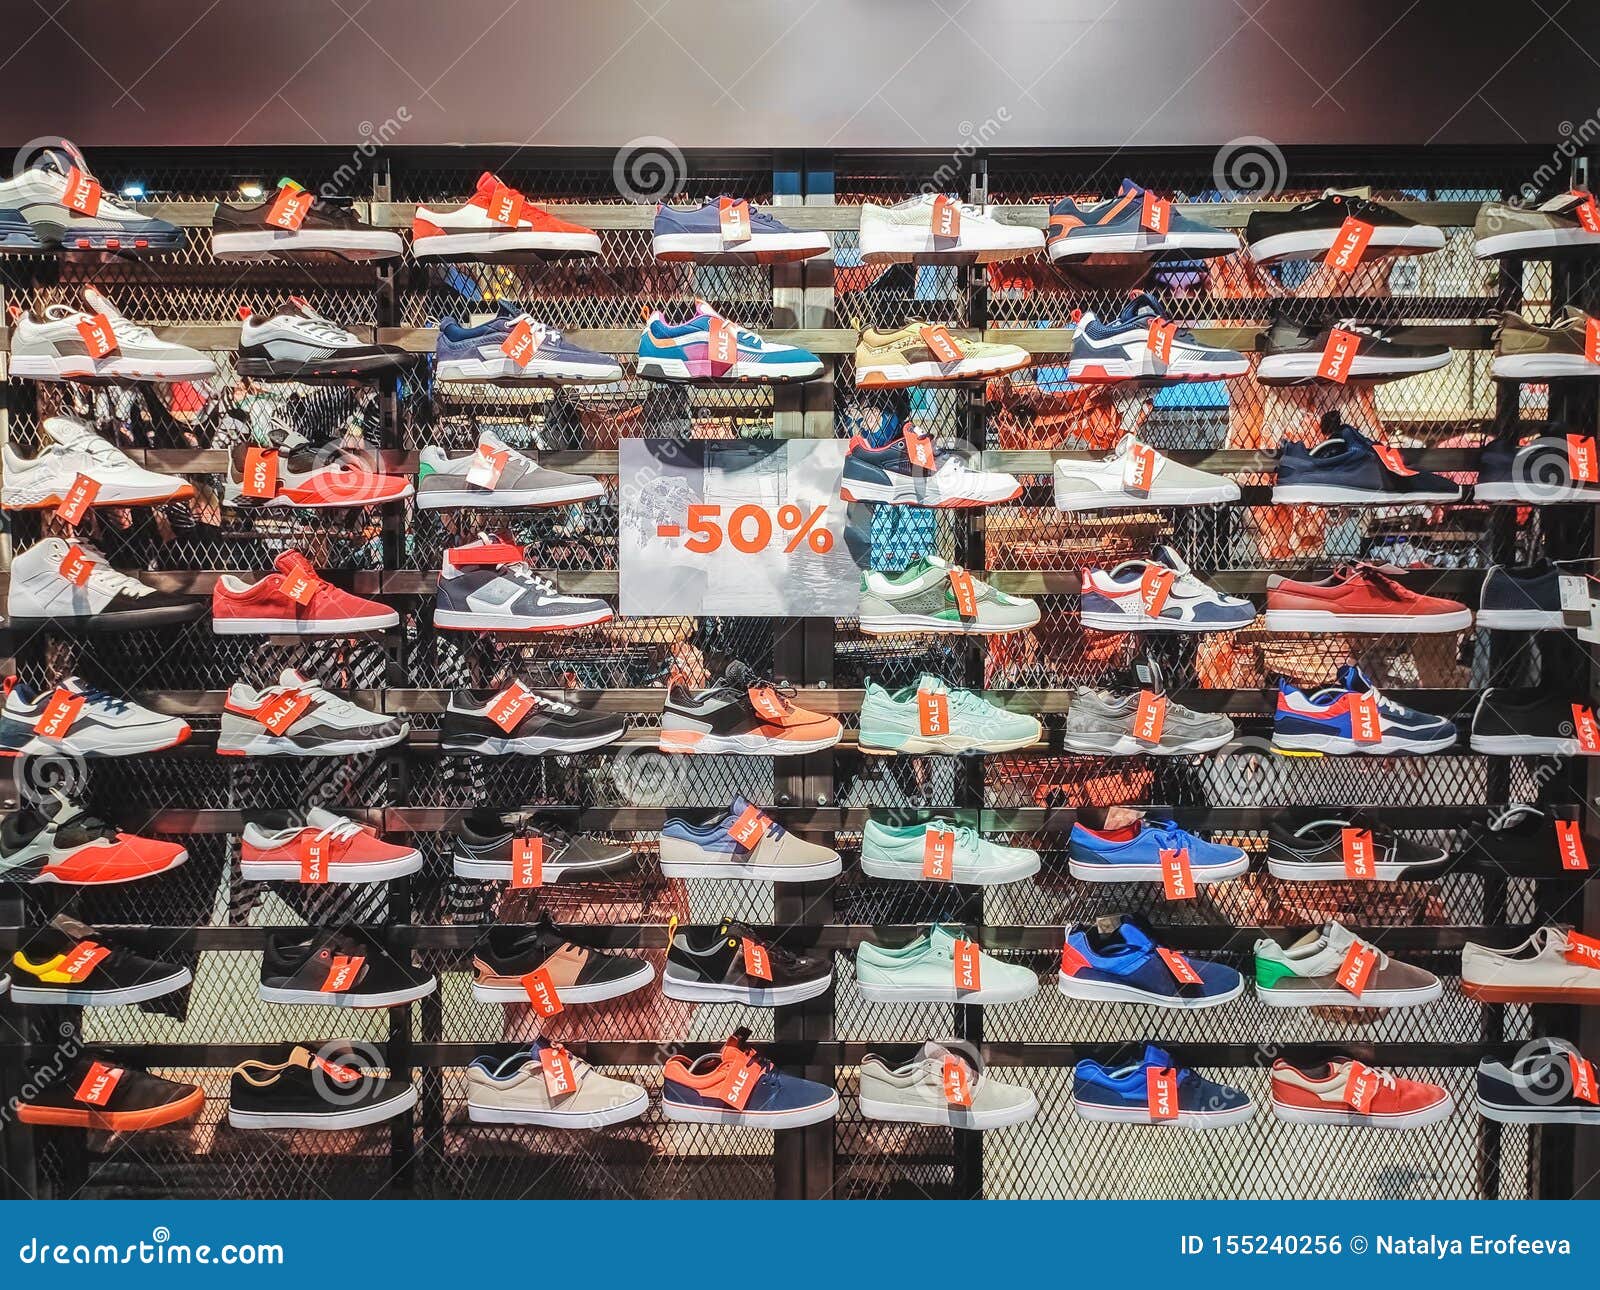 shoe stores having sales